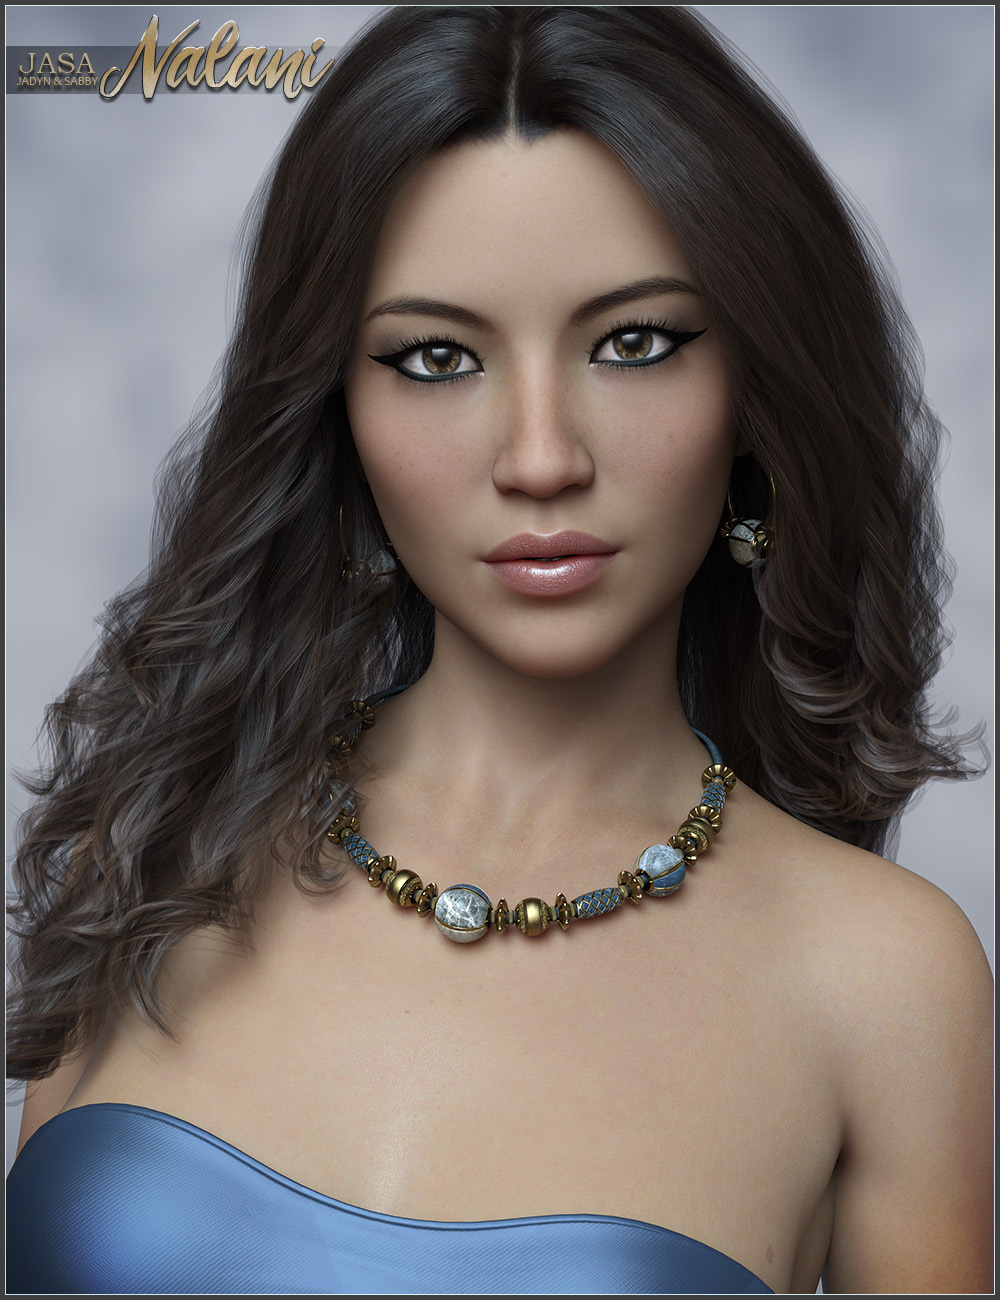 JASA Nalani for Genesis 8 and 8.1 Female by: SabbyJadyn, 3D Models by Daz 3D